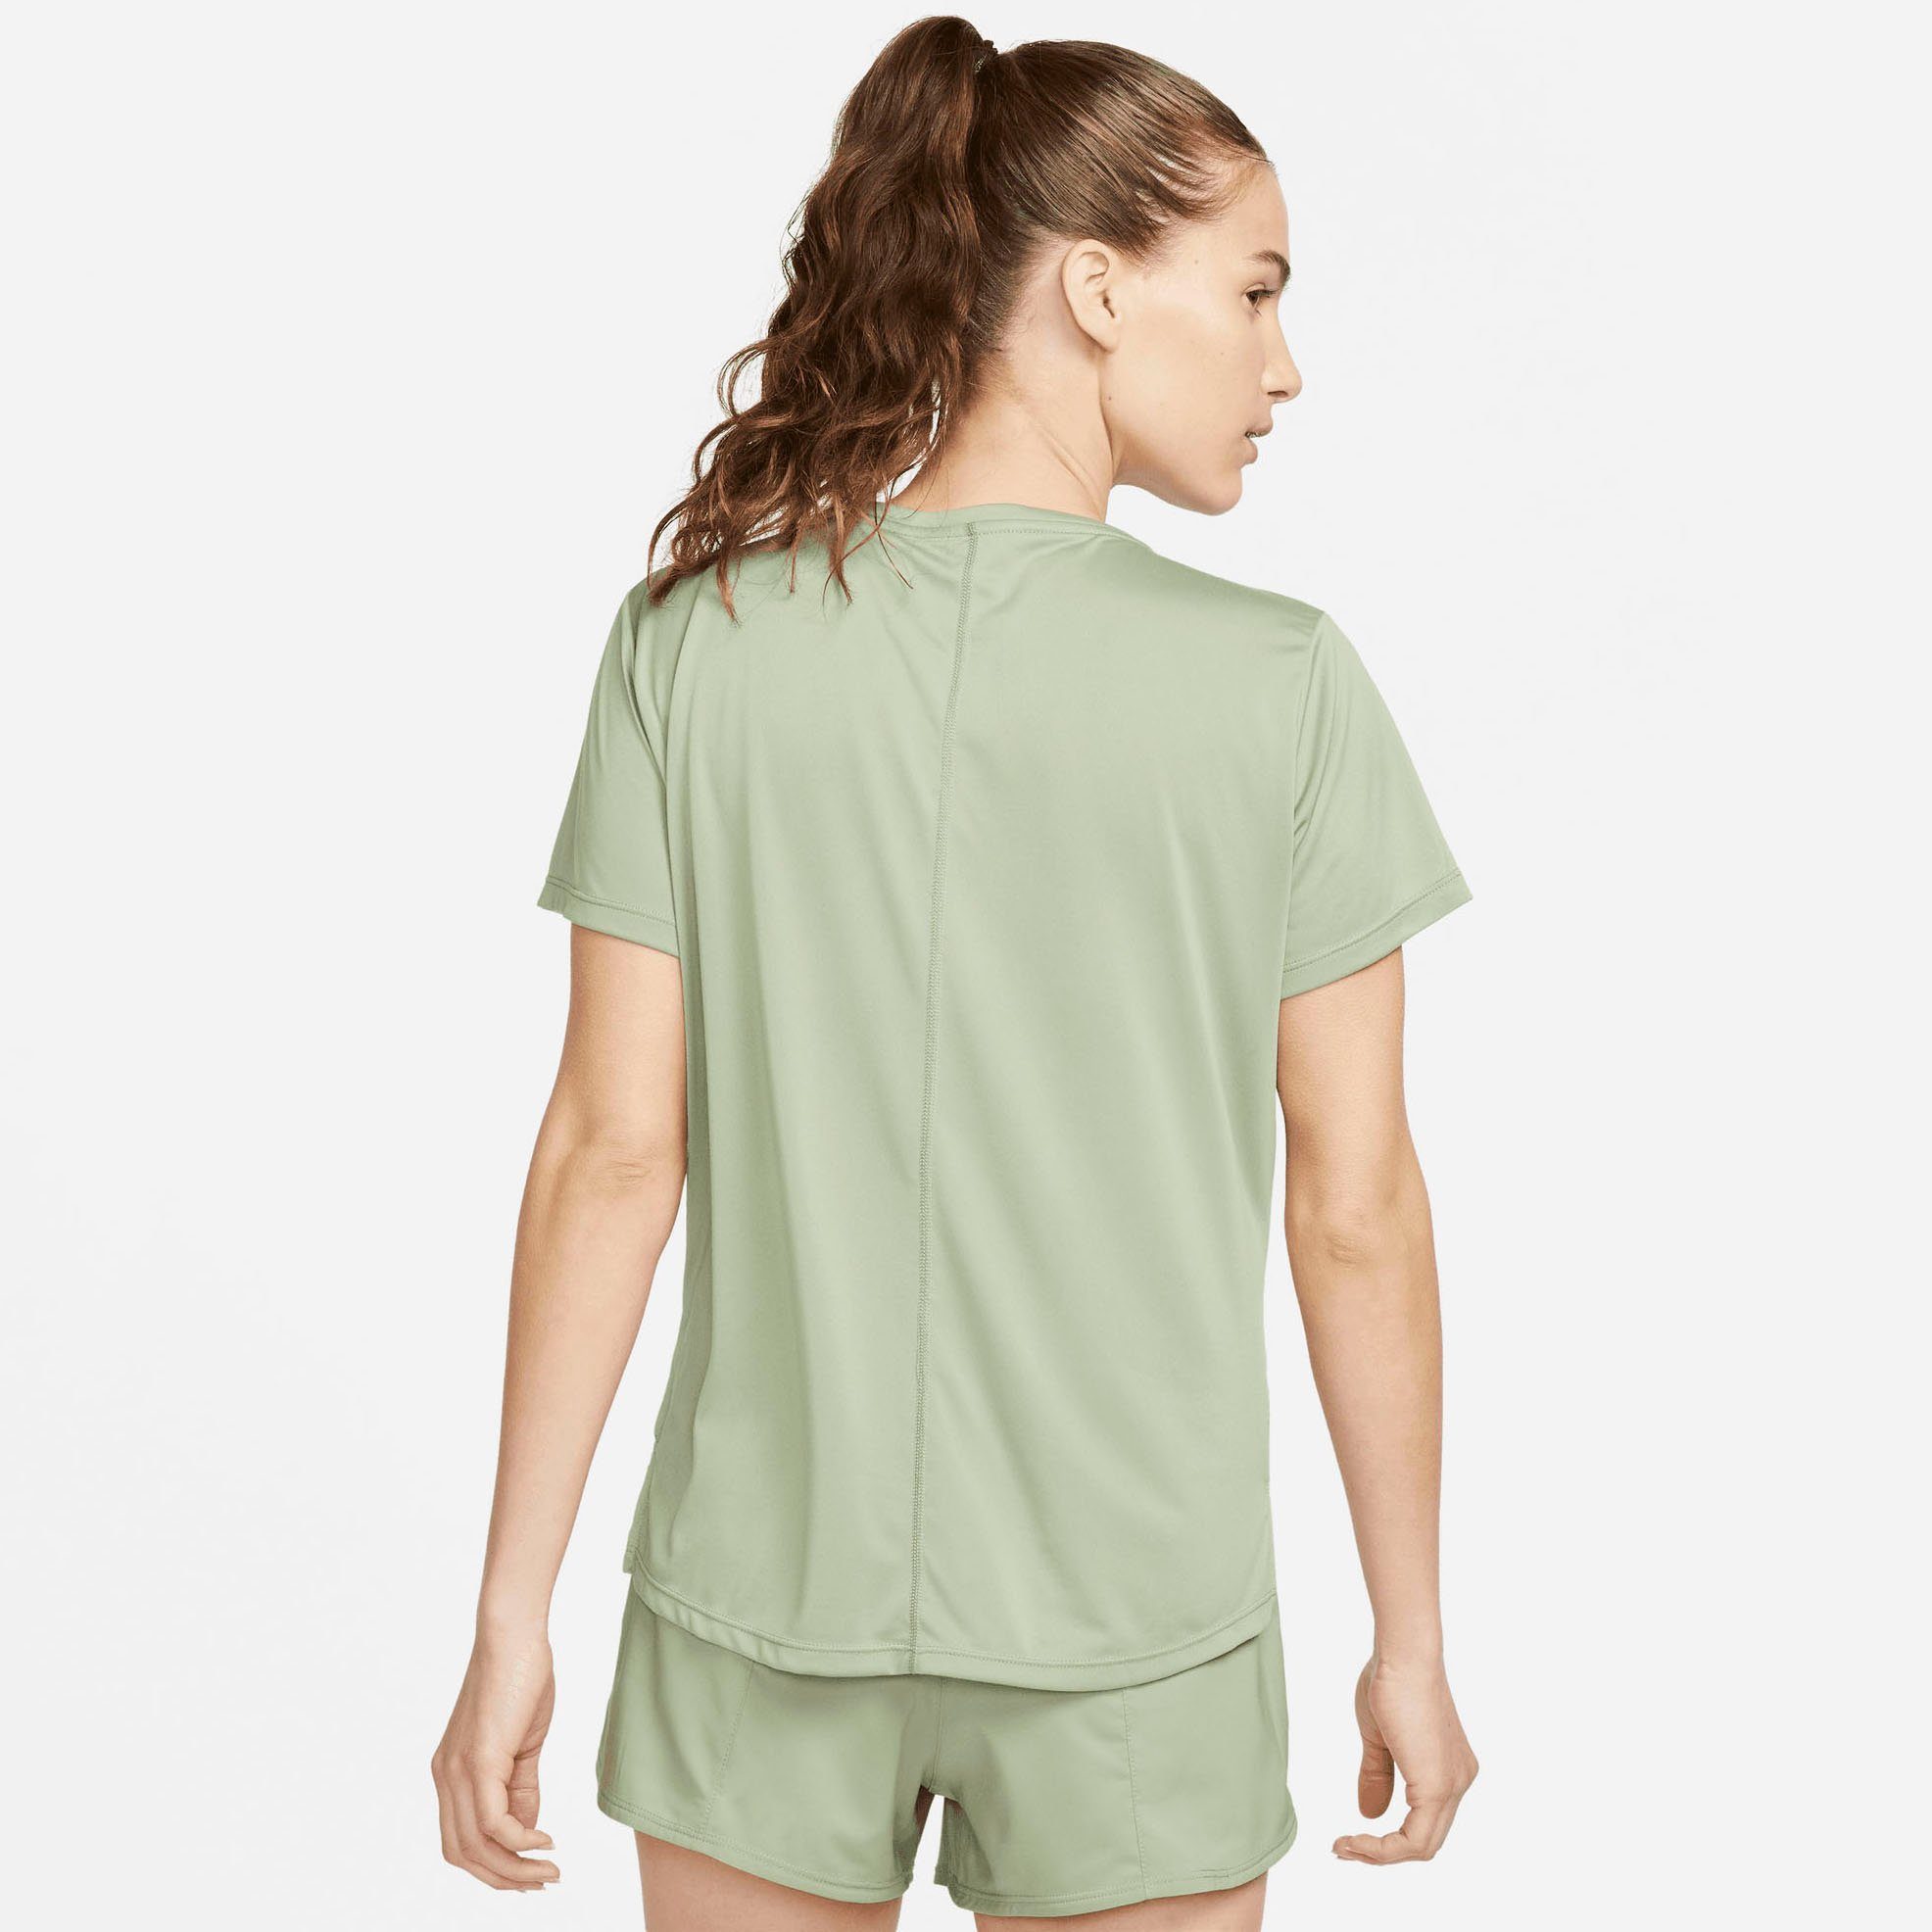 Swoosh Laufshirt Top Short-Sleeved Women's grün One Nike Dri-FIT